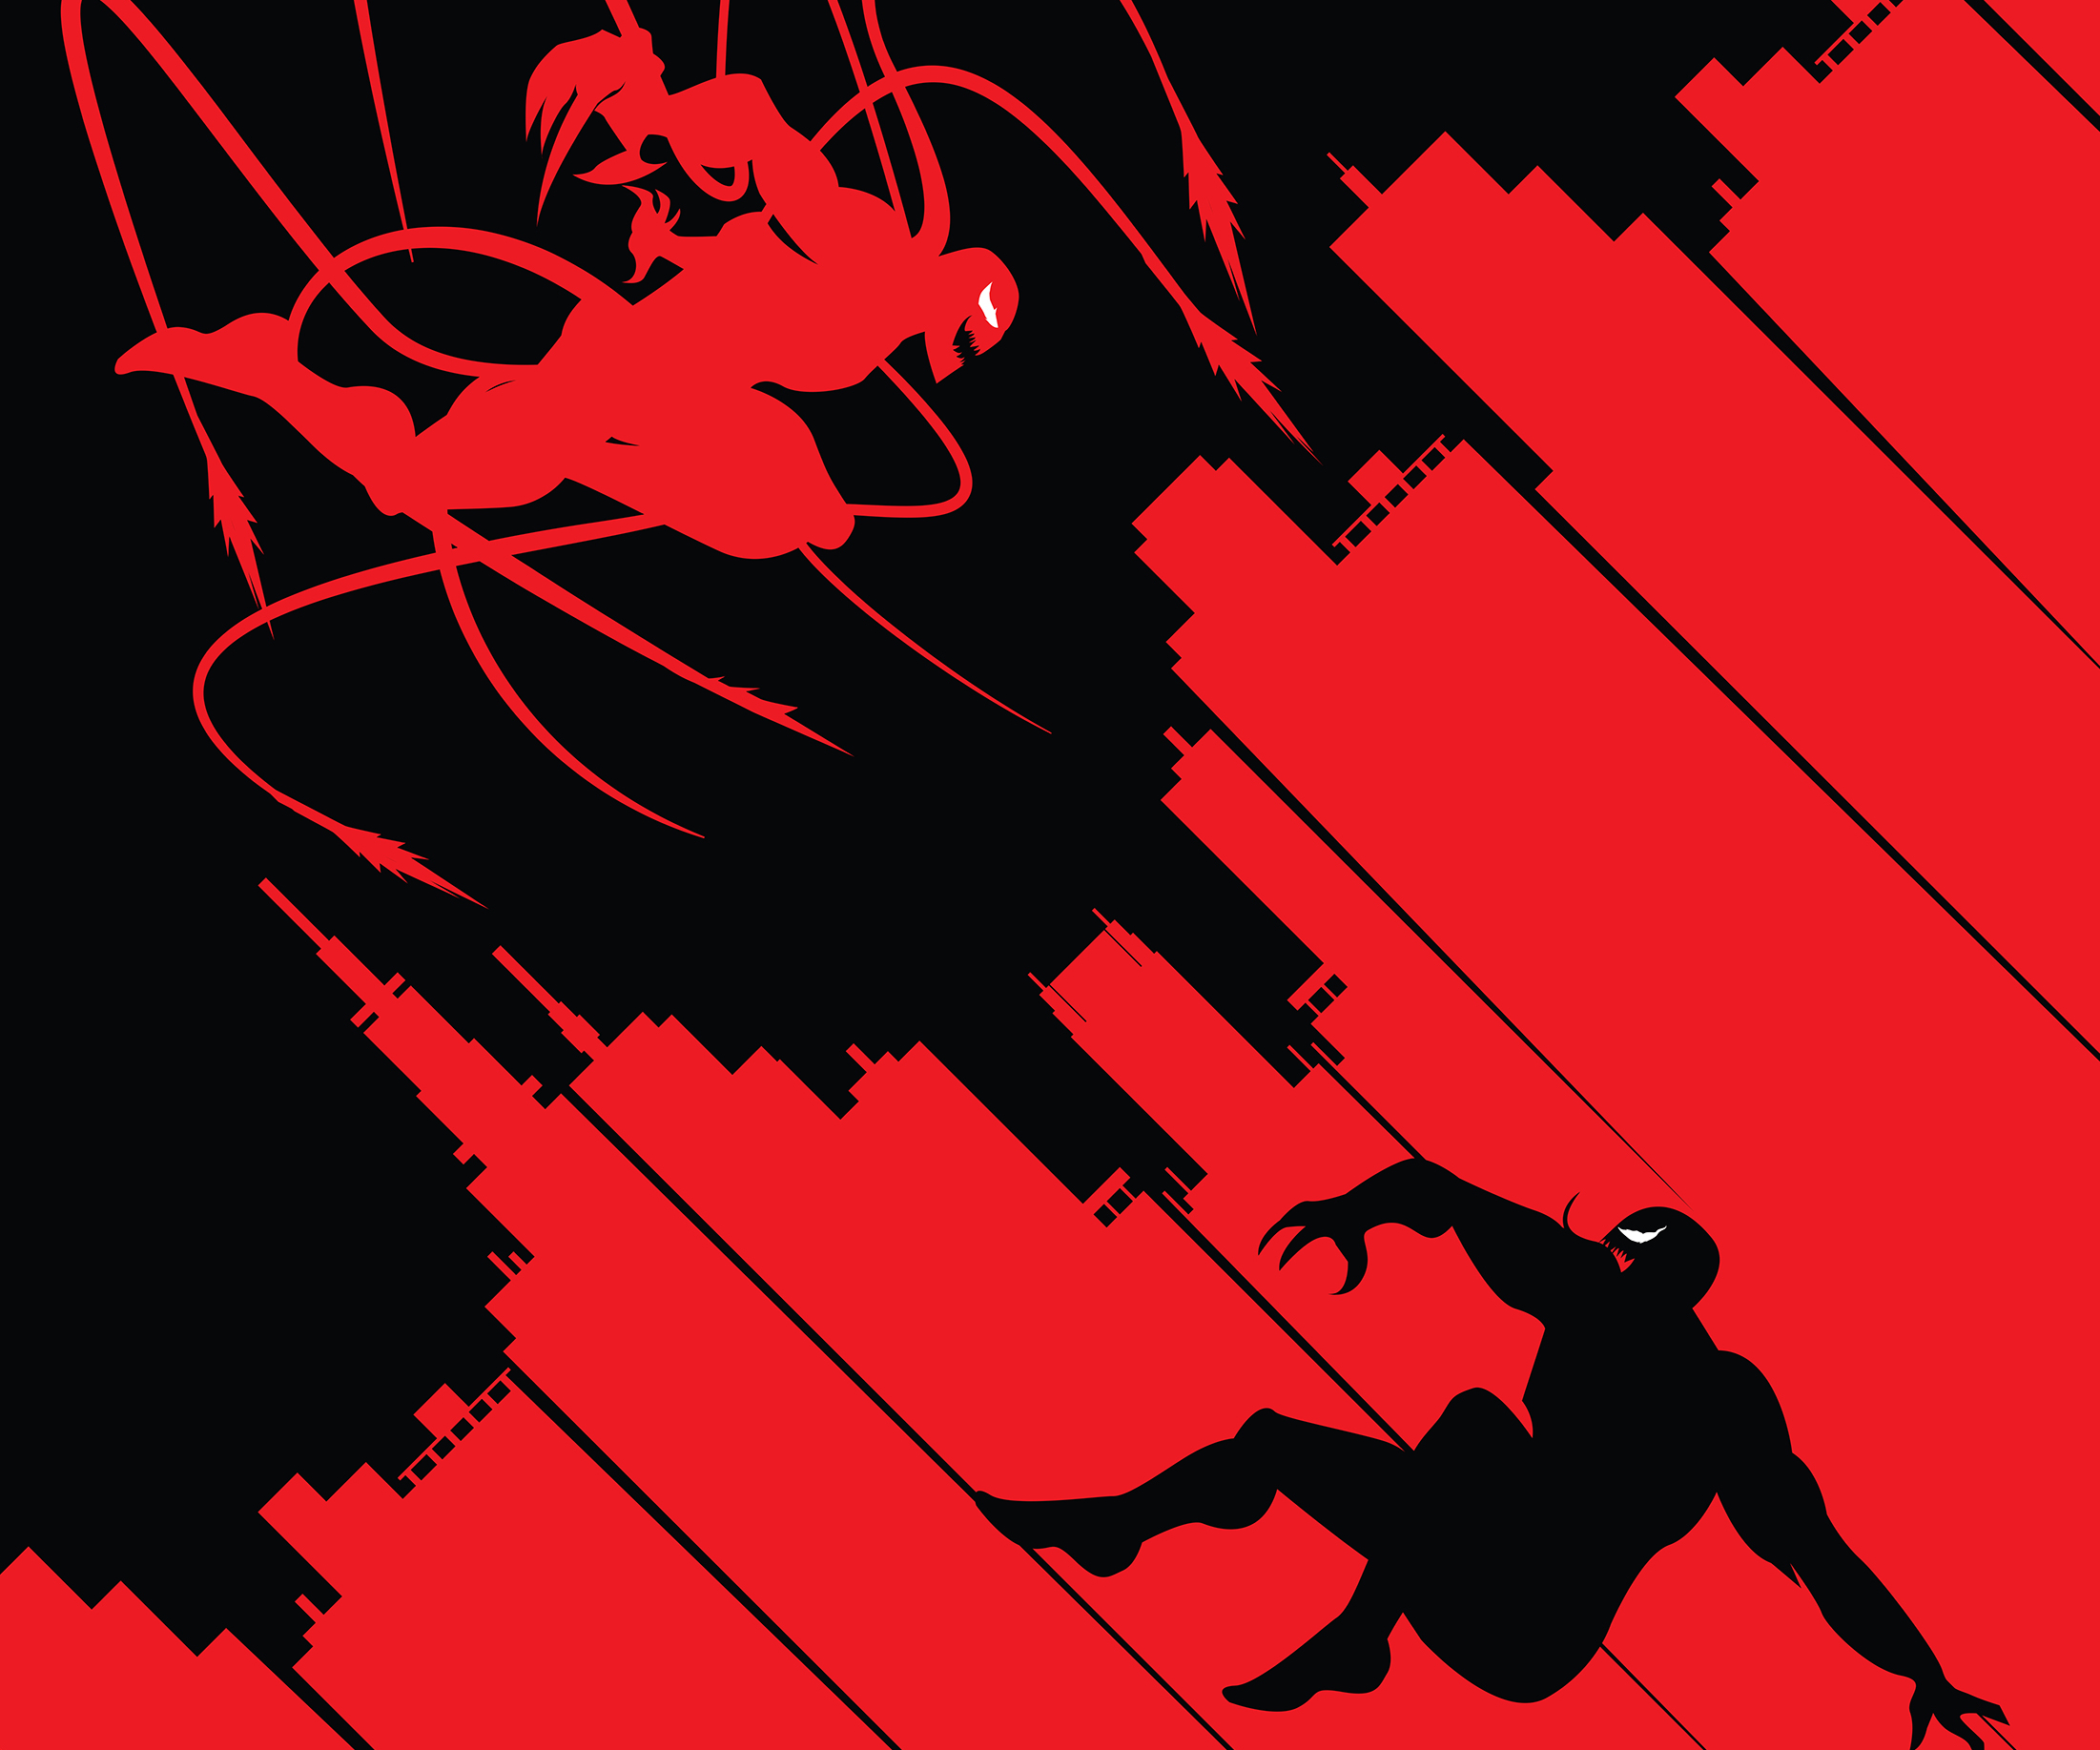 movie, venom: let there be carnage, carnage (marvel comics), venom